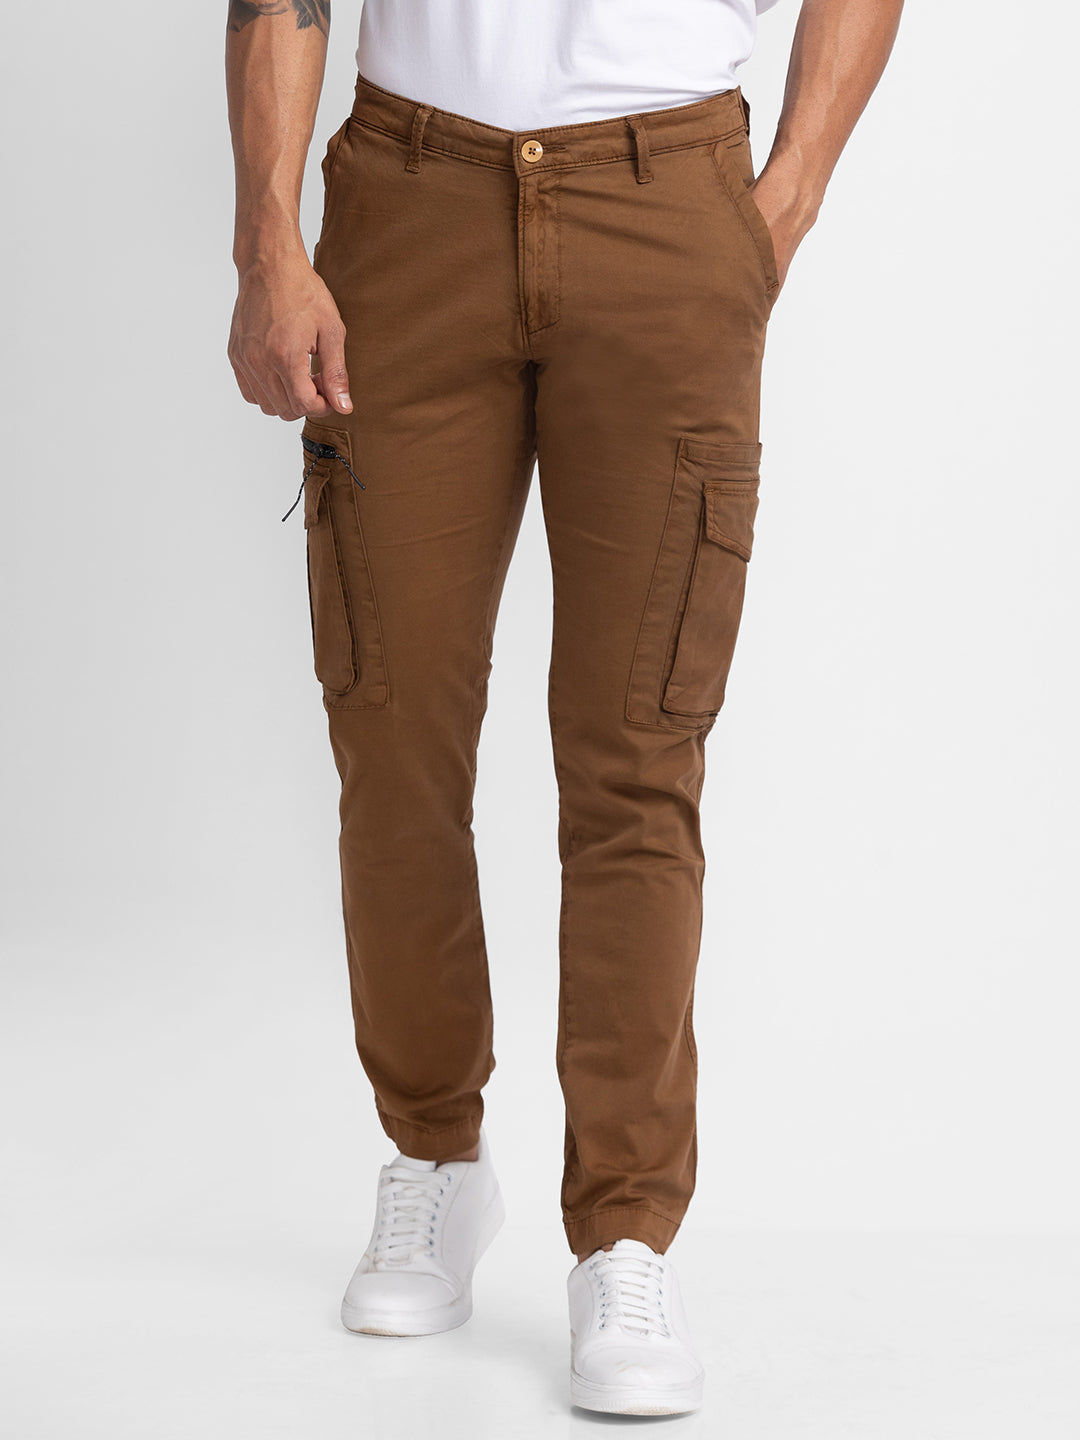 Spykar Mud Brown Cotton Slim Fit Regular Length Trousers For Men